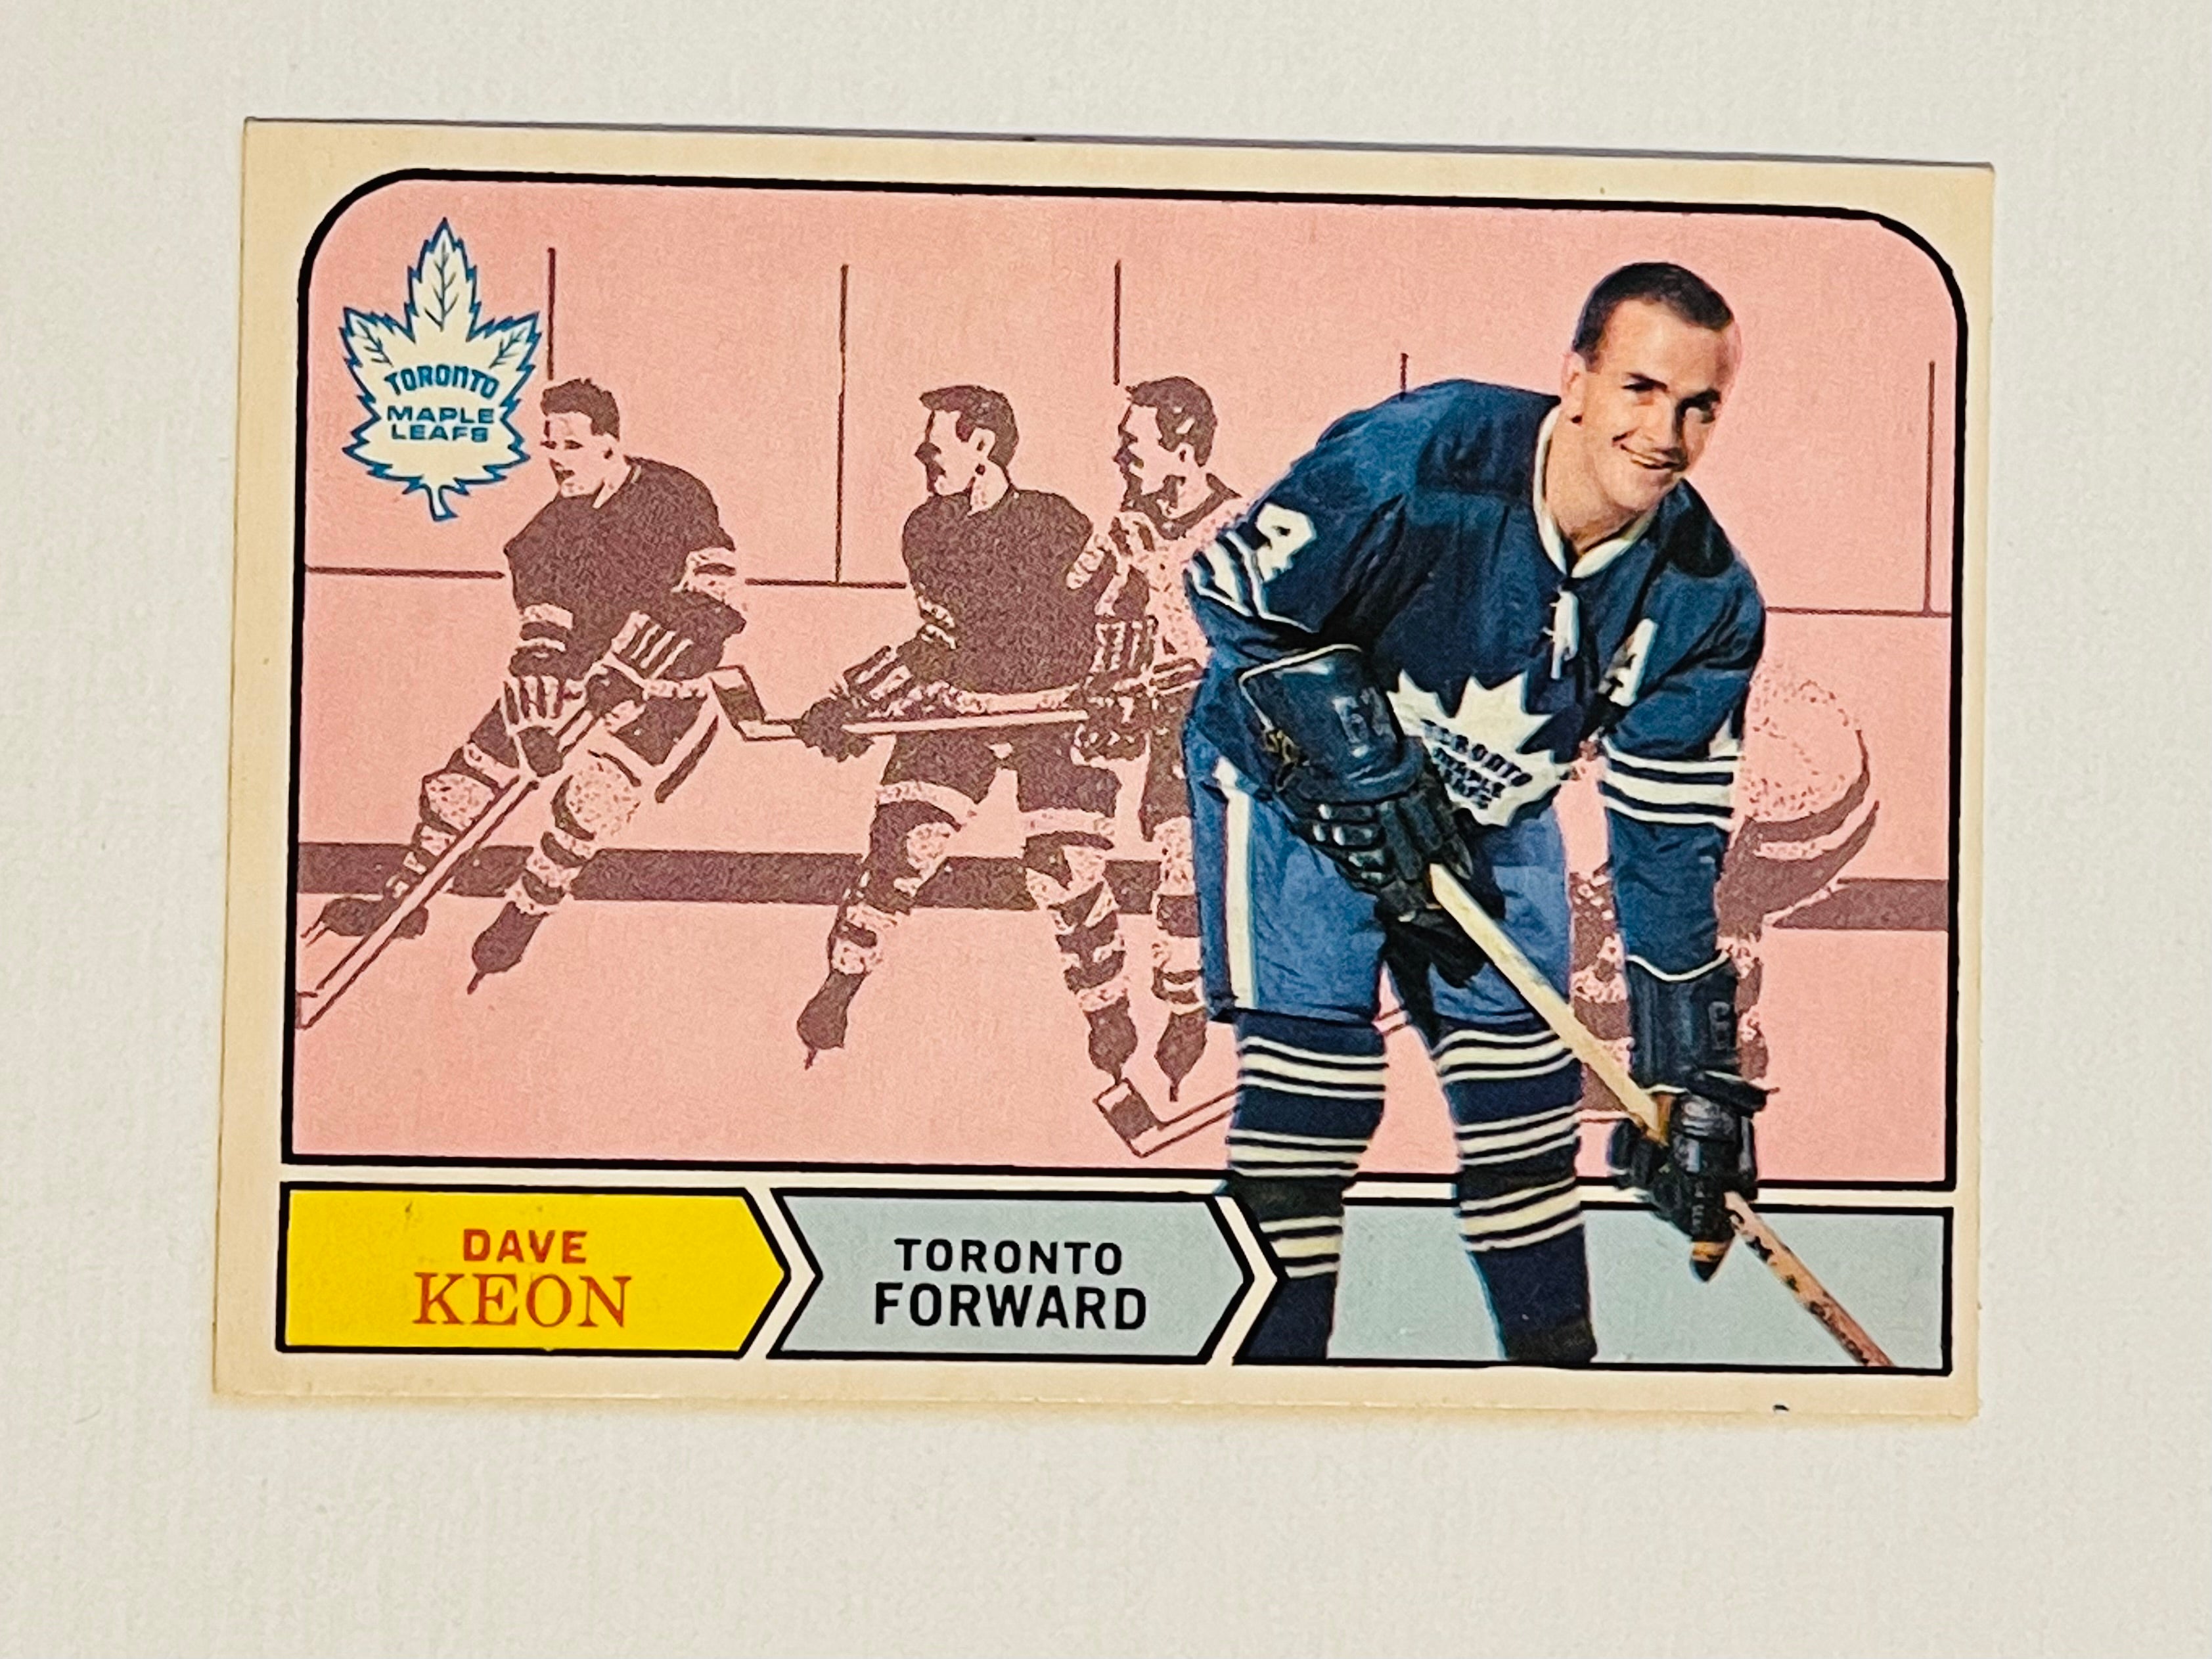 1968-69 Opc Dave Keon hockey card